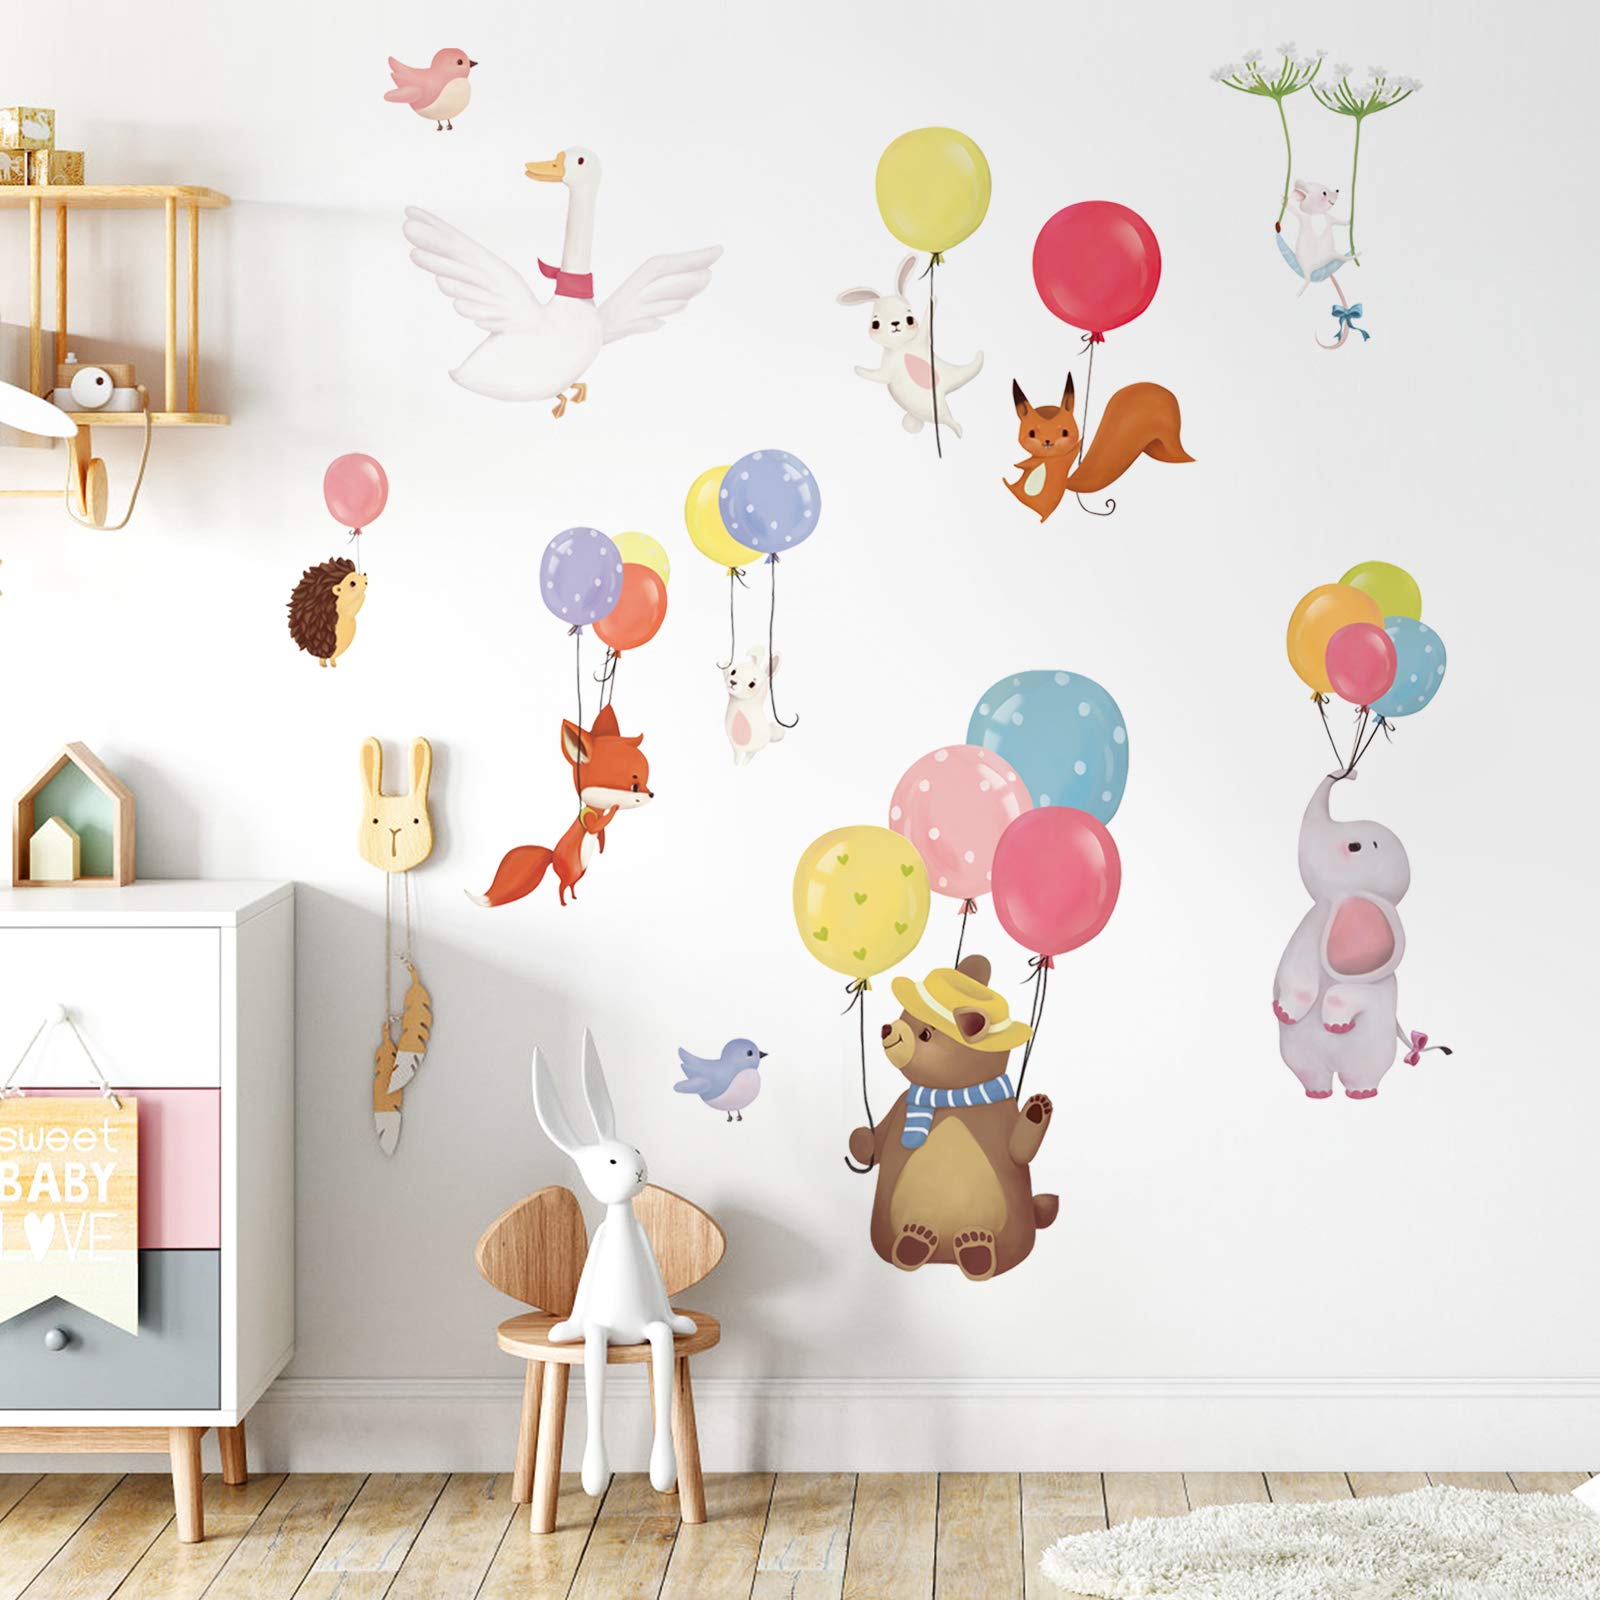 decalmile Colorful Balloon Flying Animals Wall Decals Elephant Bear Fox Wall Stickers Baby Nursery Kids Bedroom Classroom Wall Decor